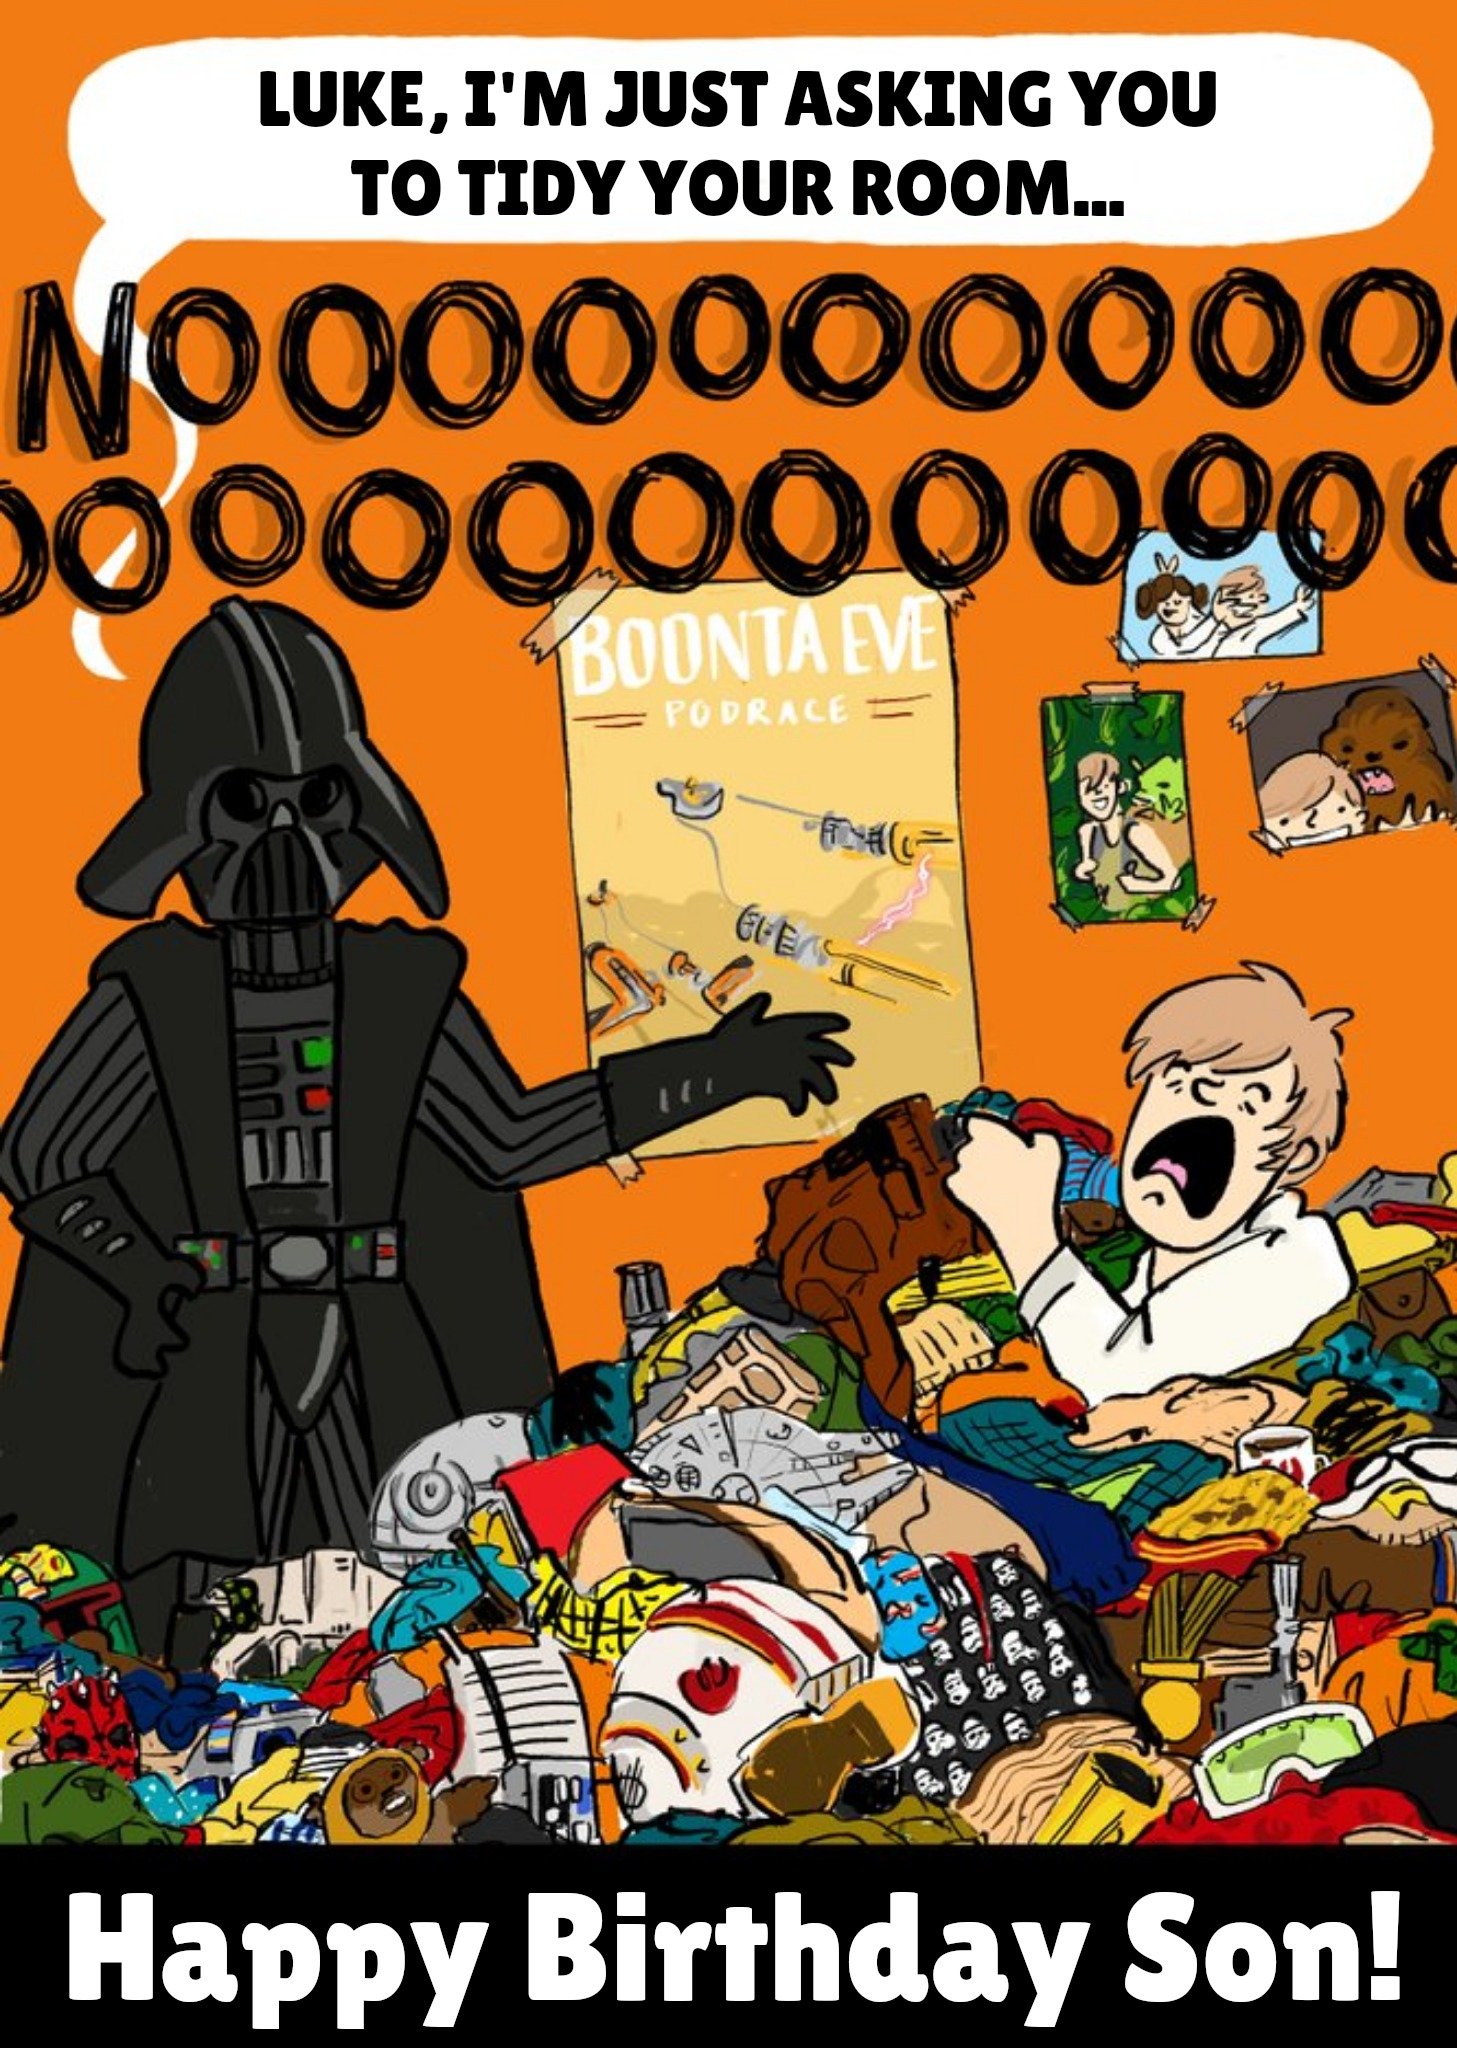 Disney Funny Star Wars Darth Vader Luke Skywalker Birthday Card - Son Ecard